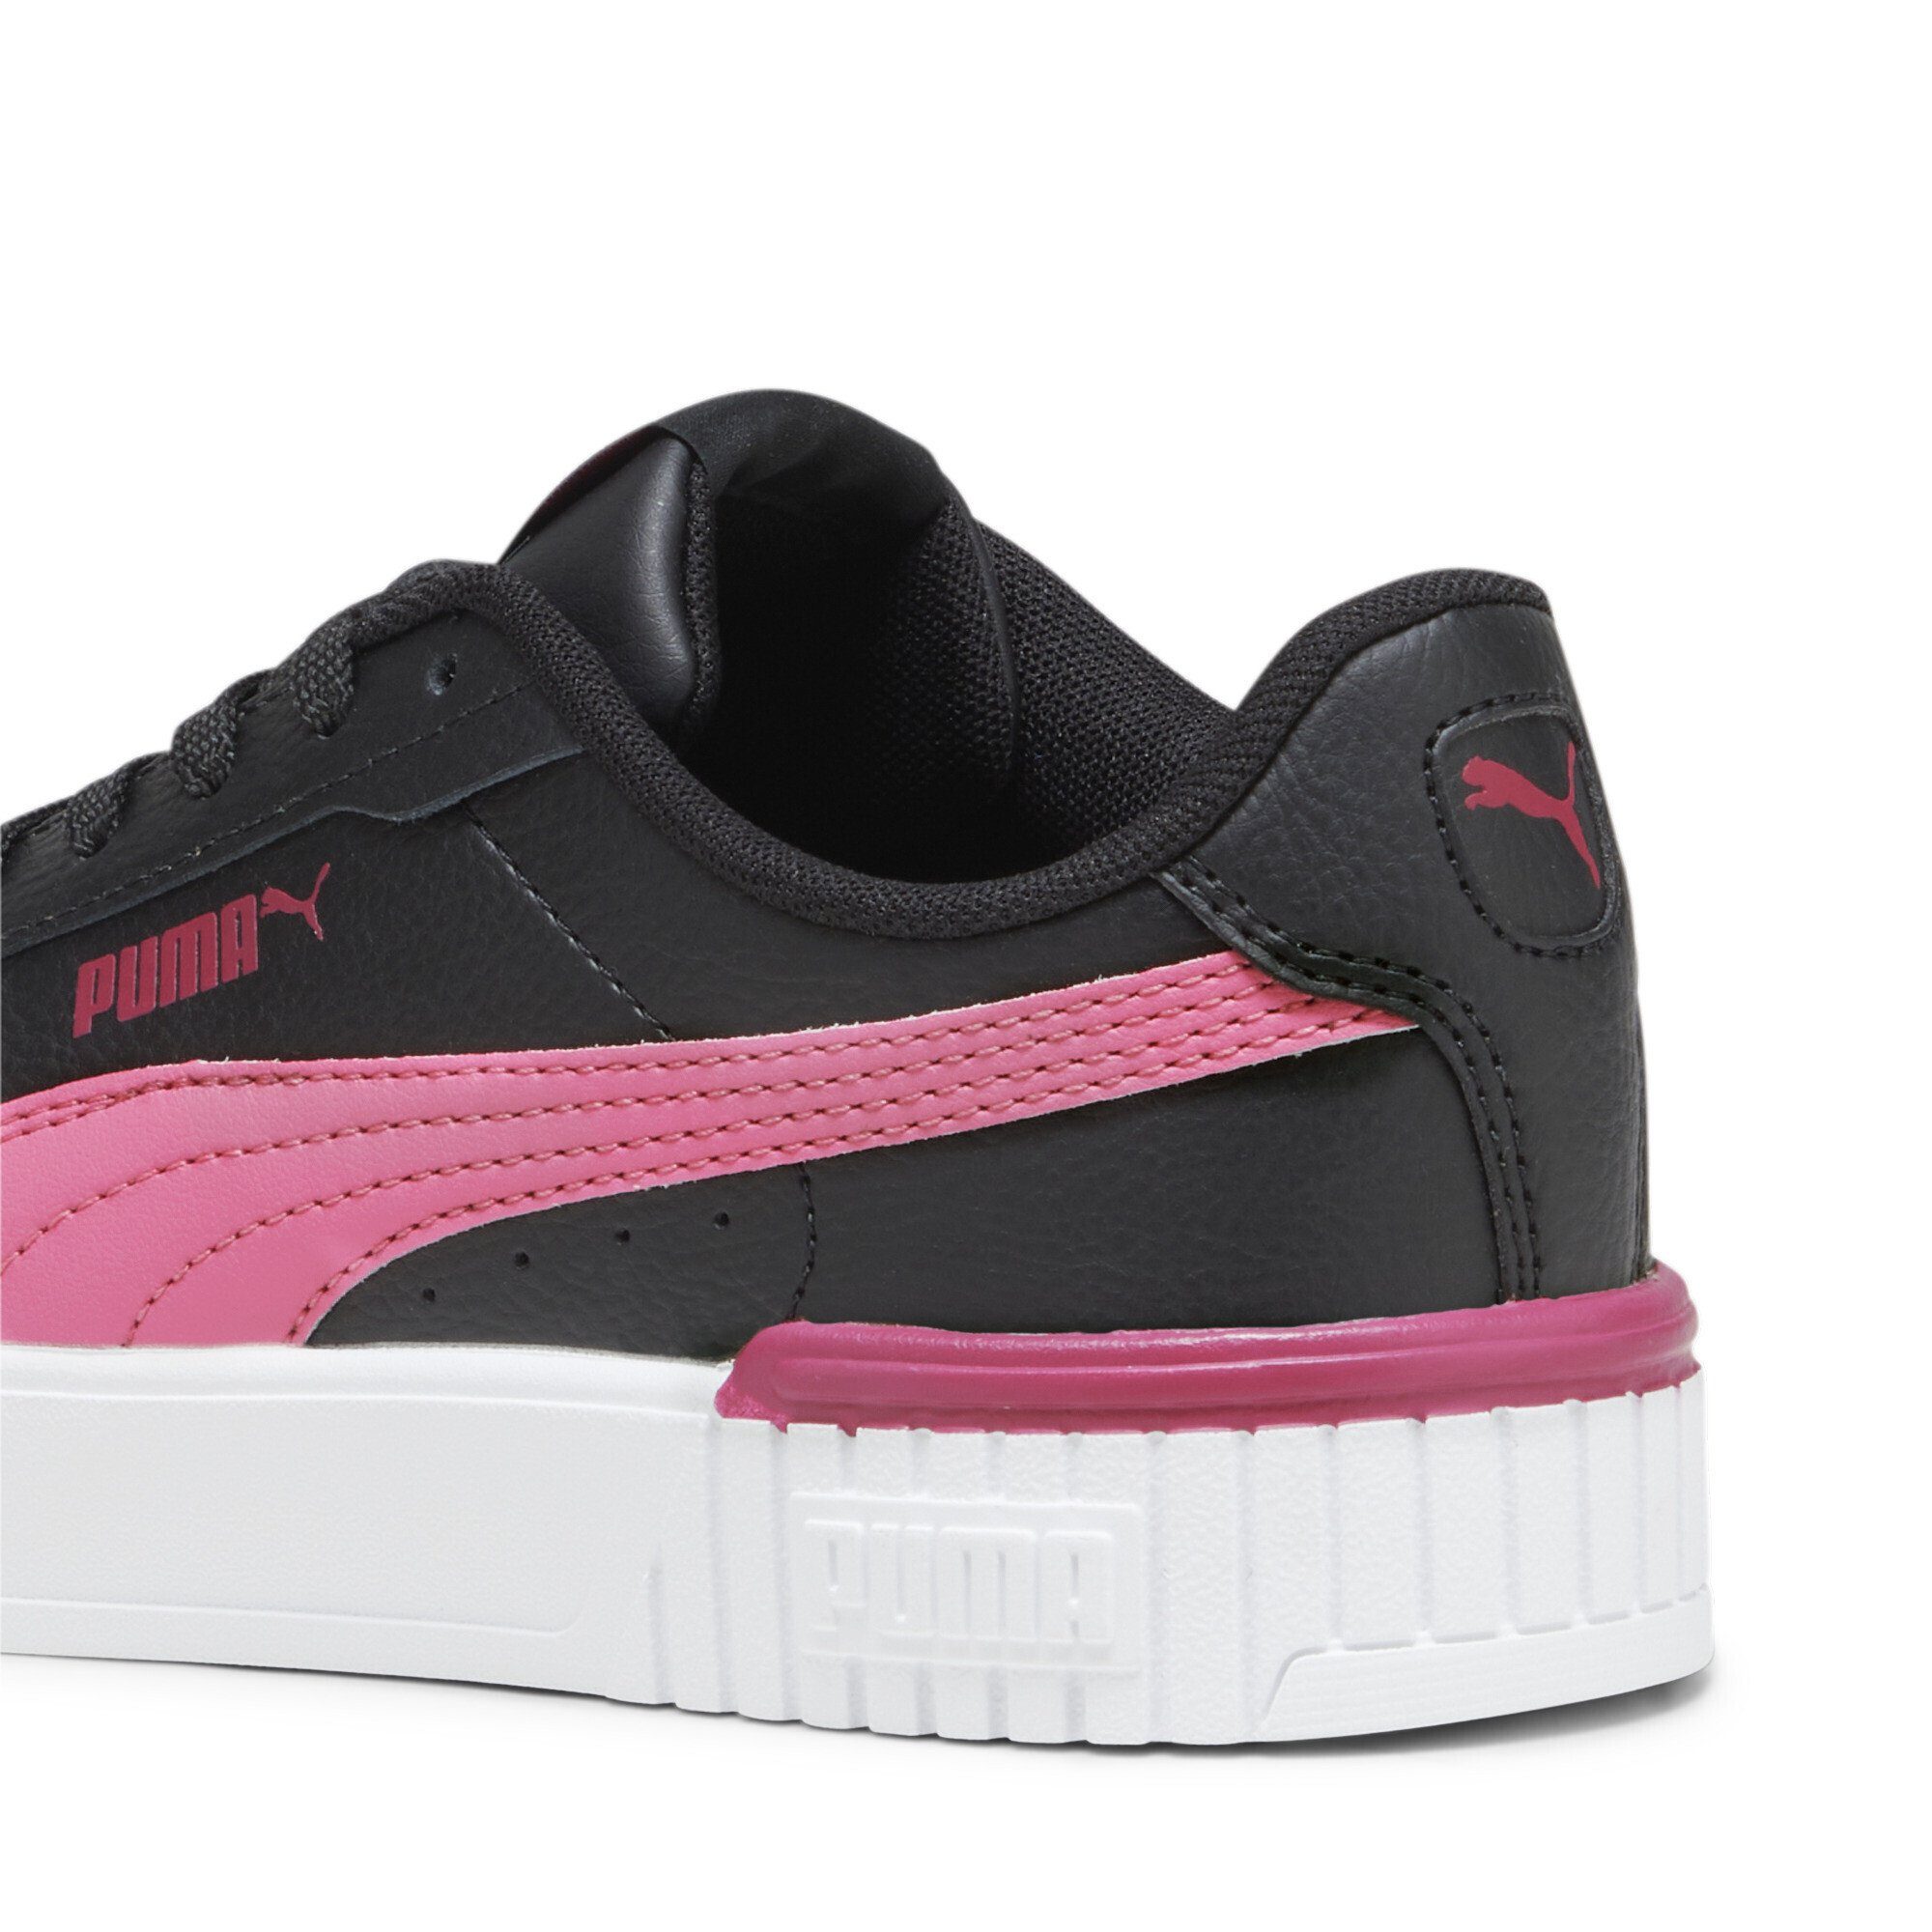 Jugendliche Carina 2.0 Black White Sneakers Burst Sneaker Pink Strawberry PUMA Pinktastic